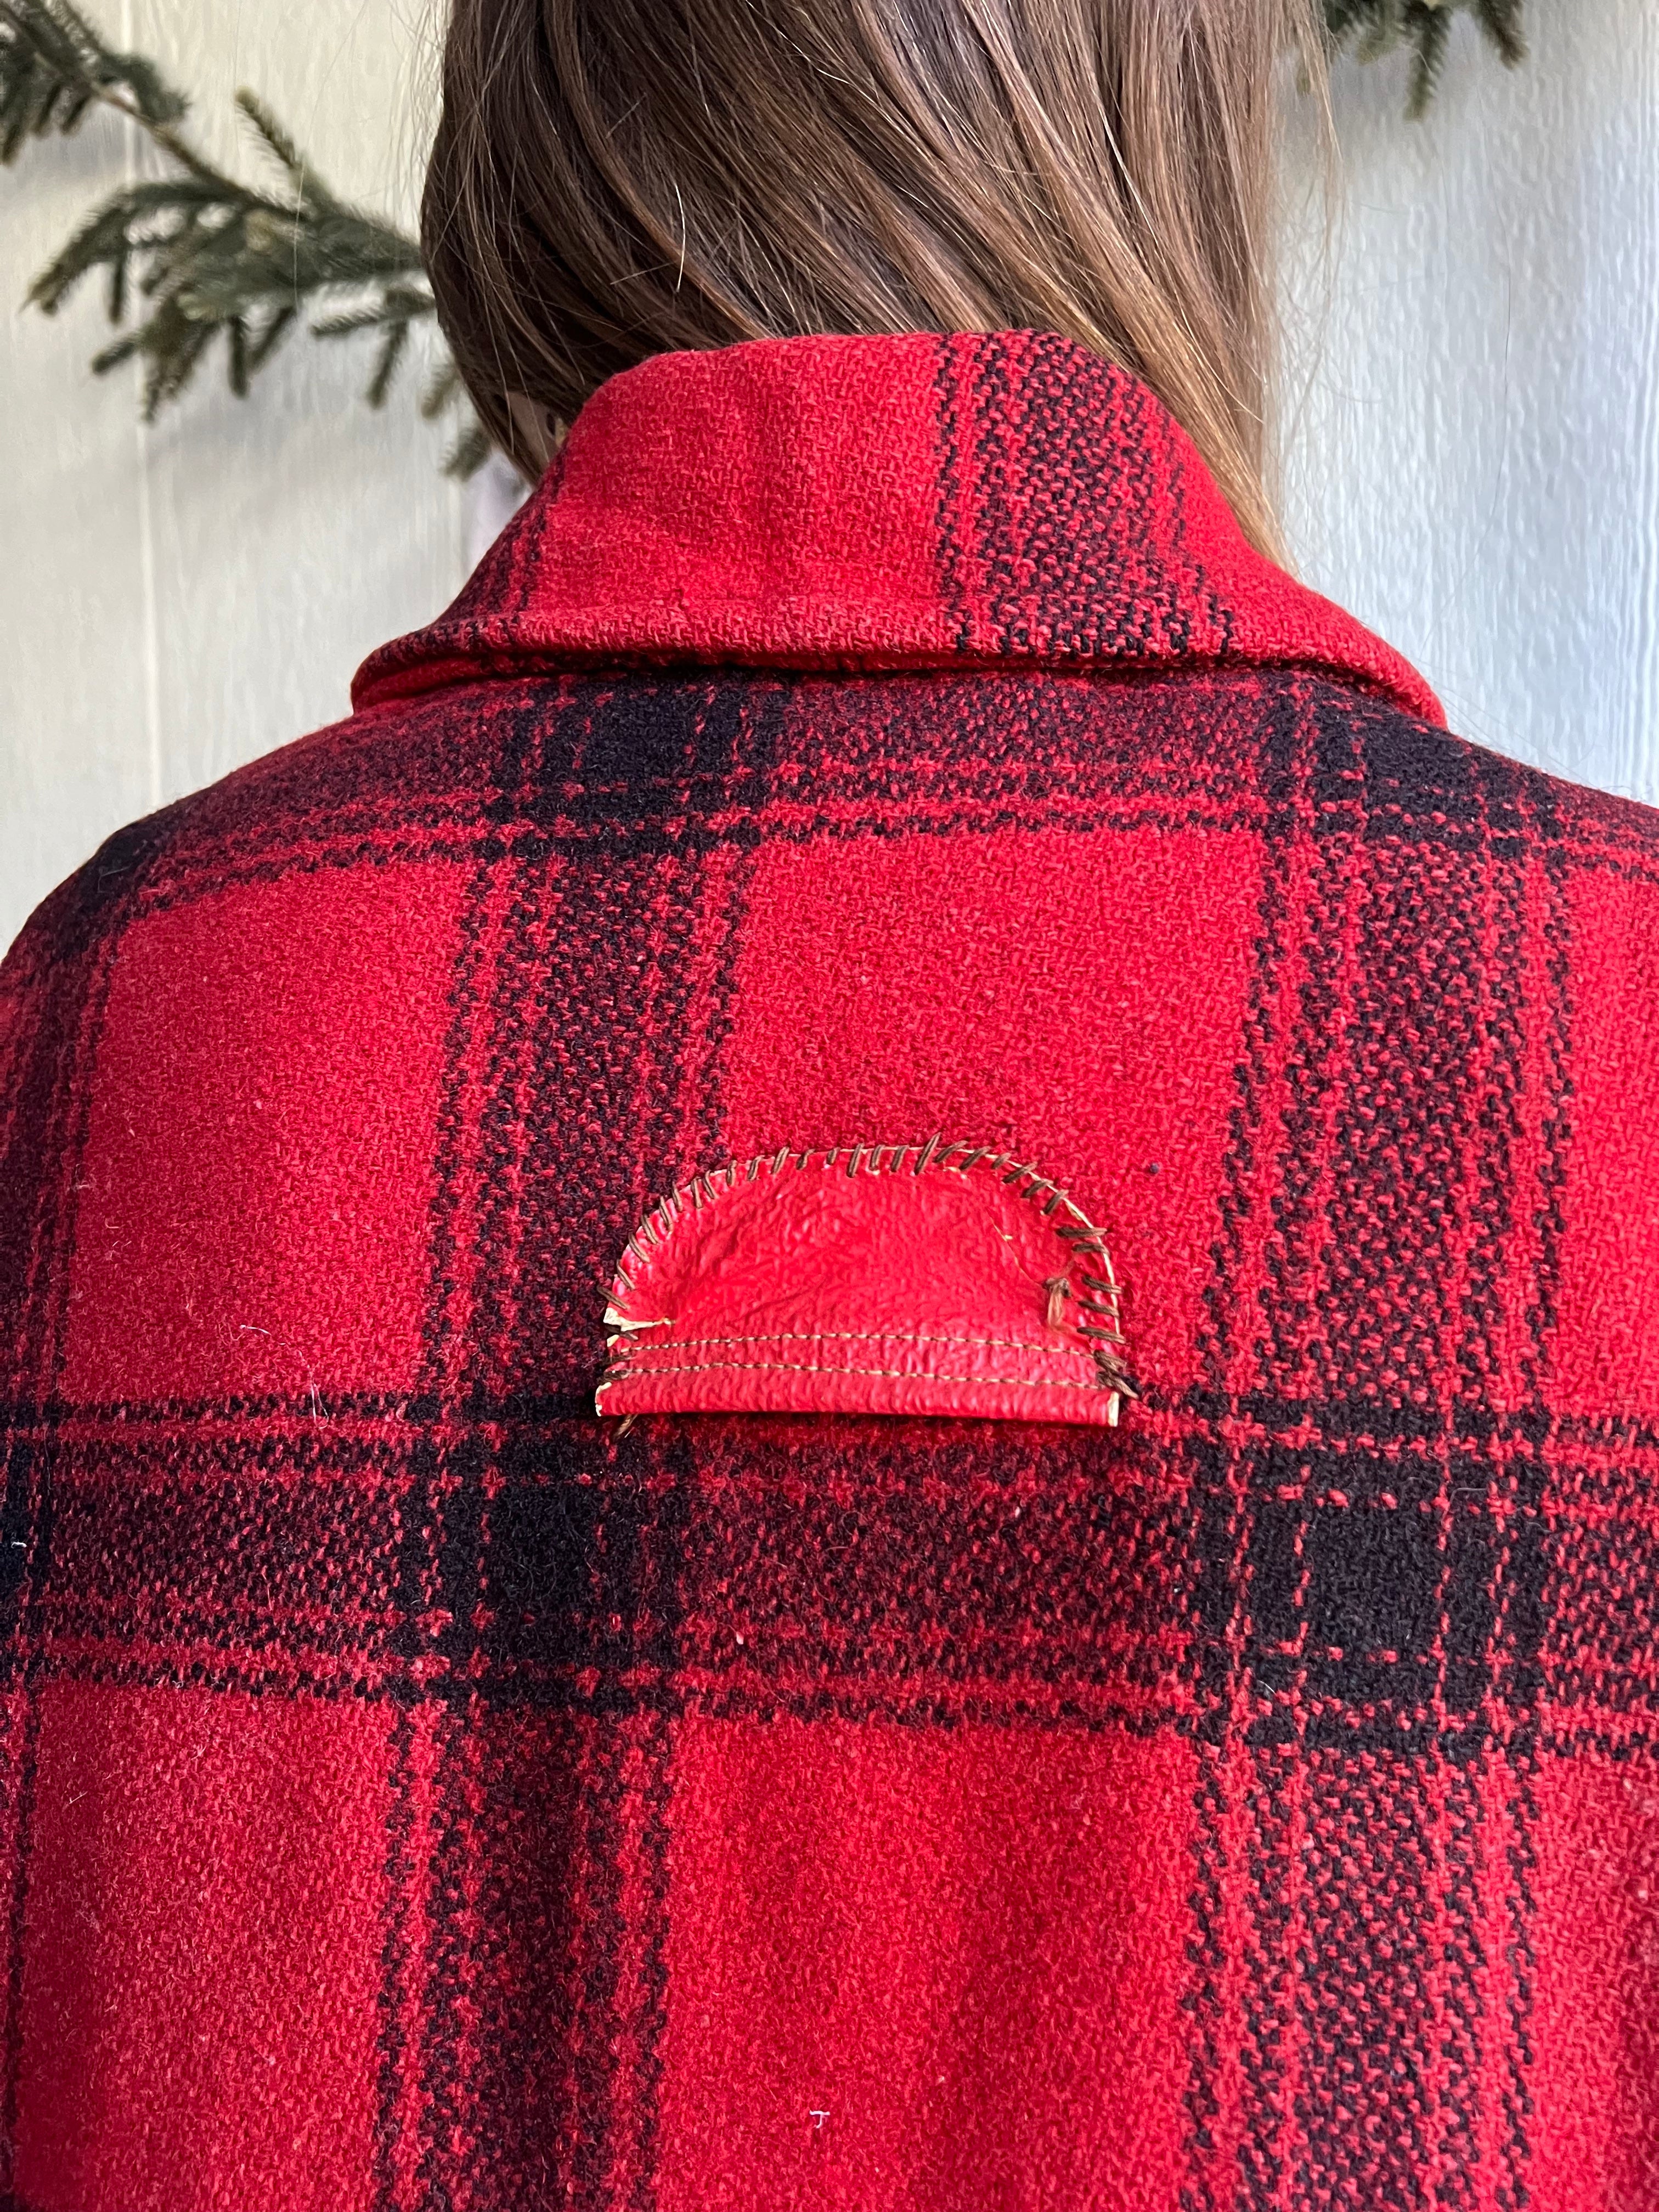 Vintage Red Wool Plaid Jacket